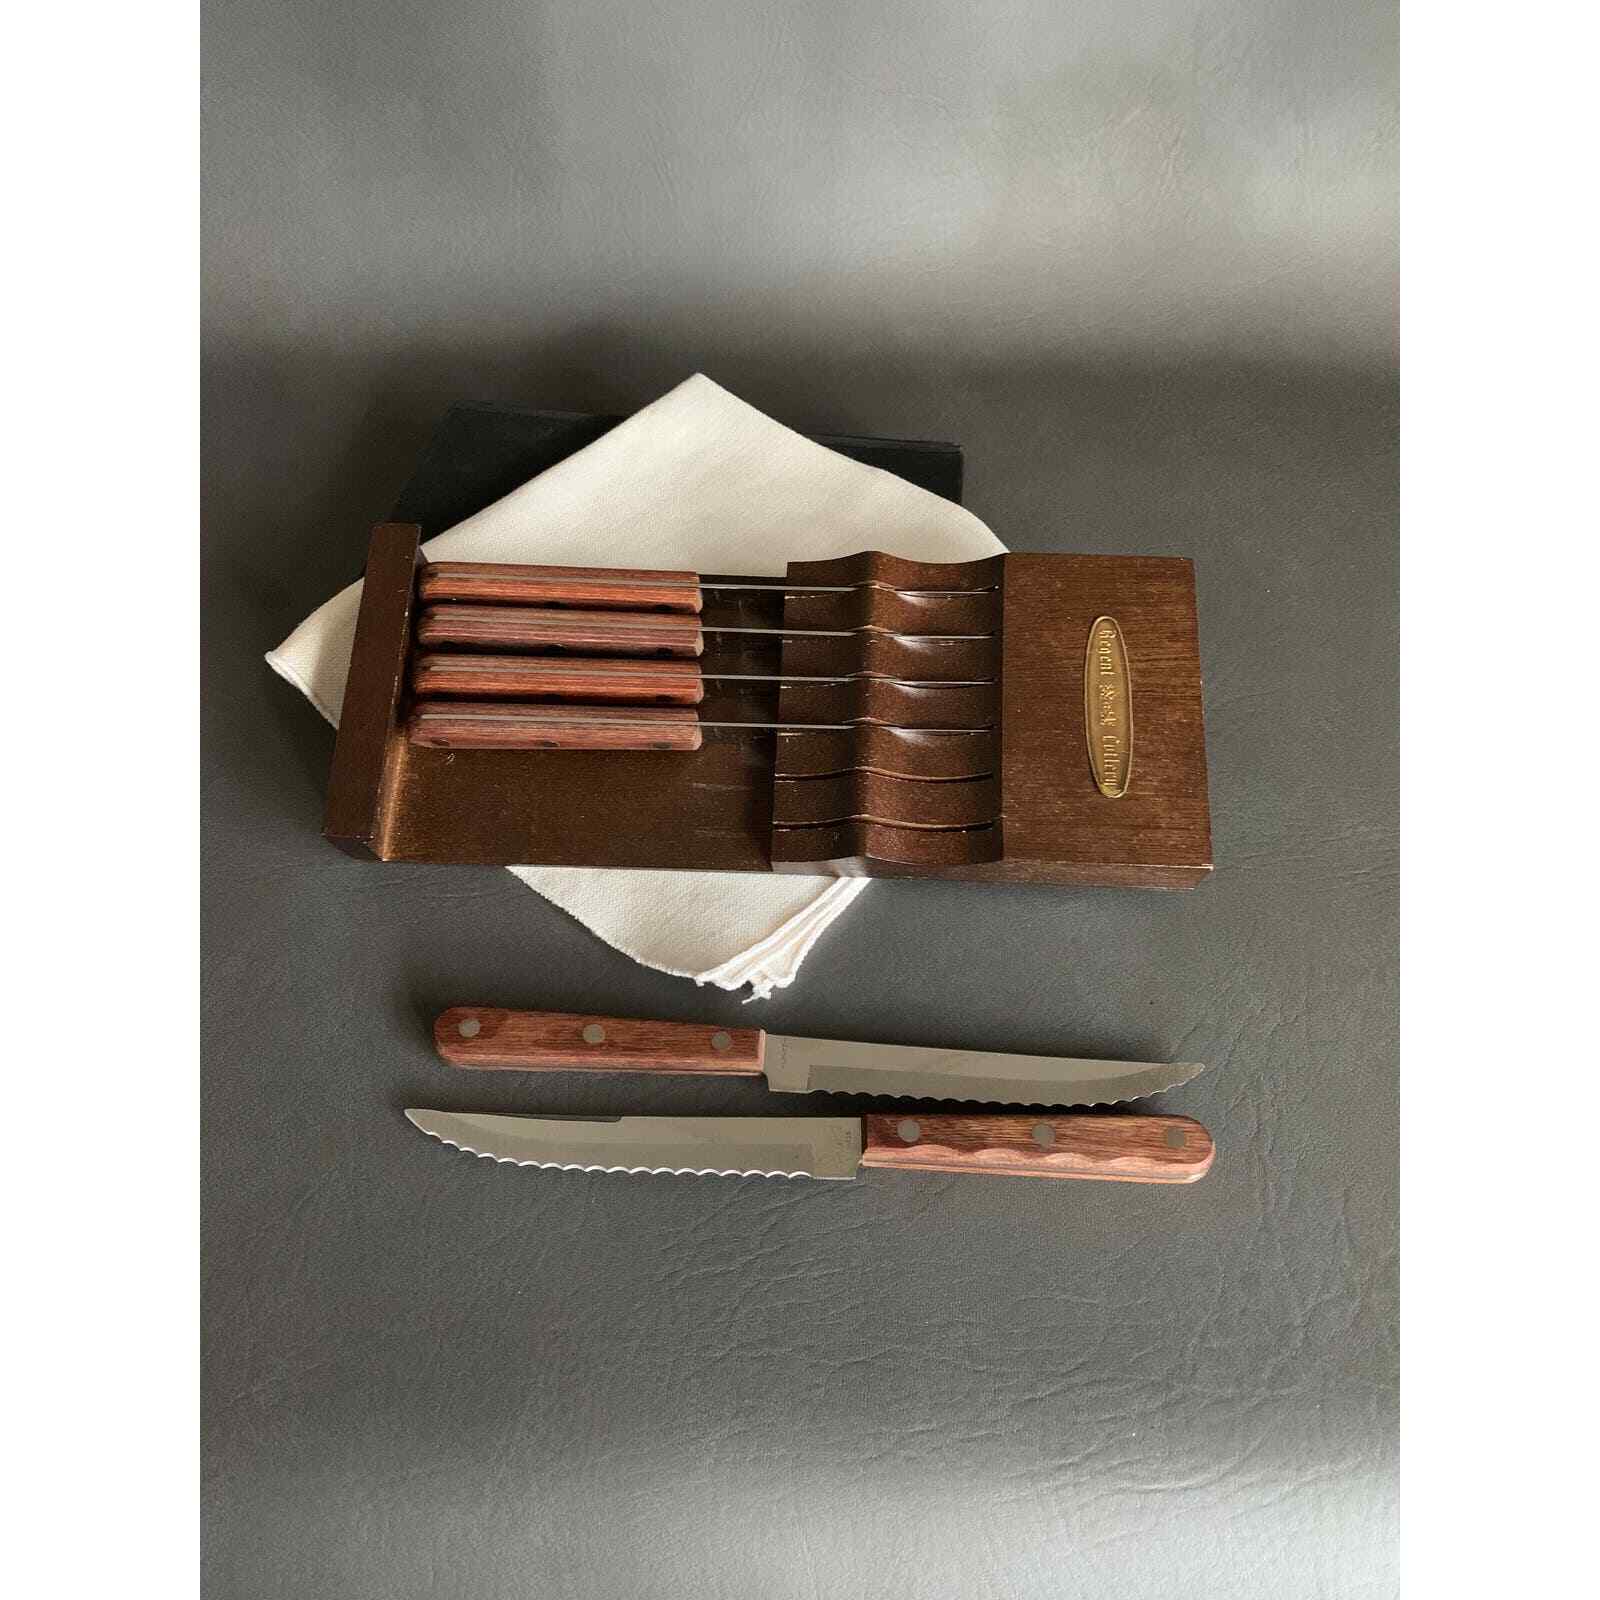 VTG REGENT SHEFFIELD Wooden Handle Steak Knives Set of 6 hangable holder cutlery